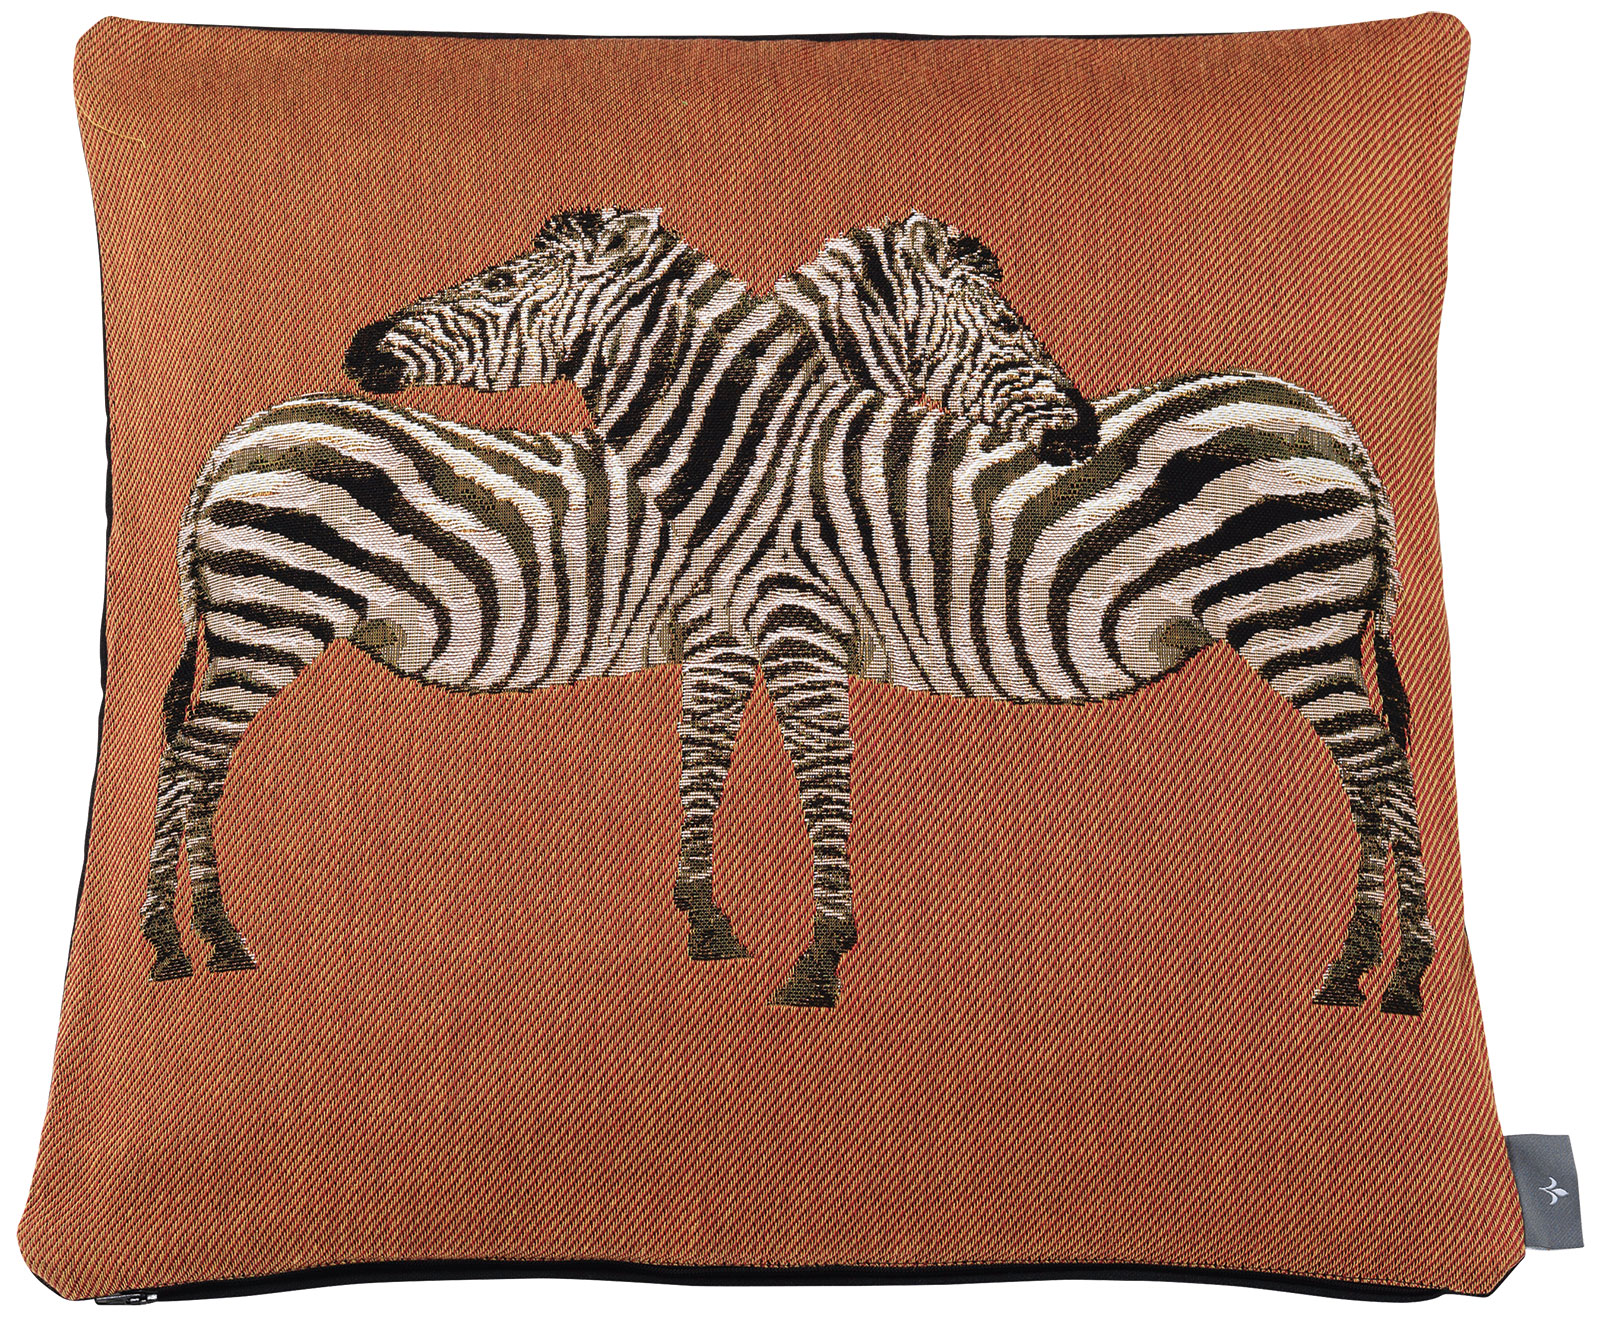 Cushion cover "Zebra", orange version